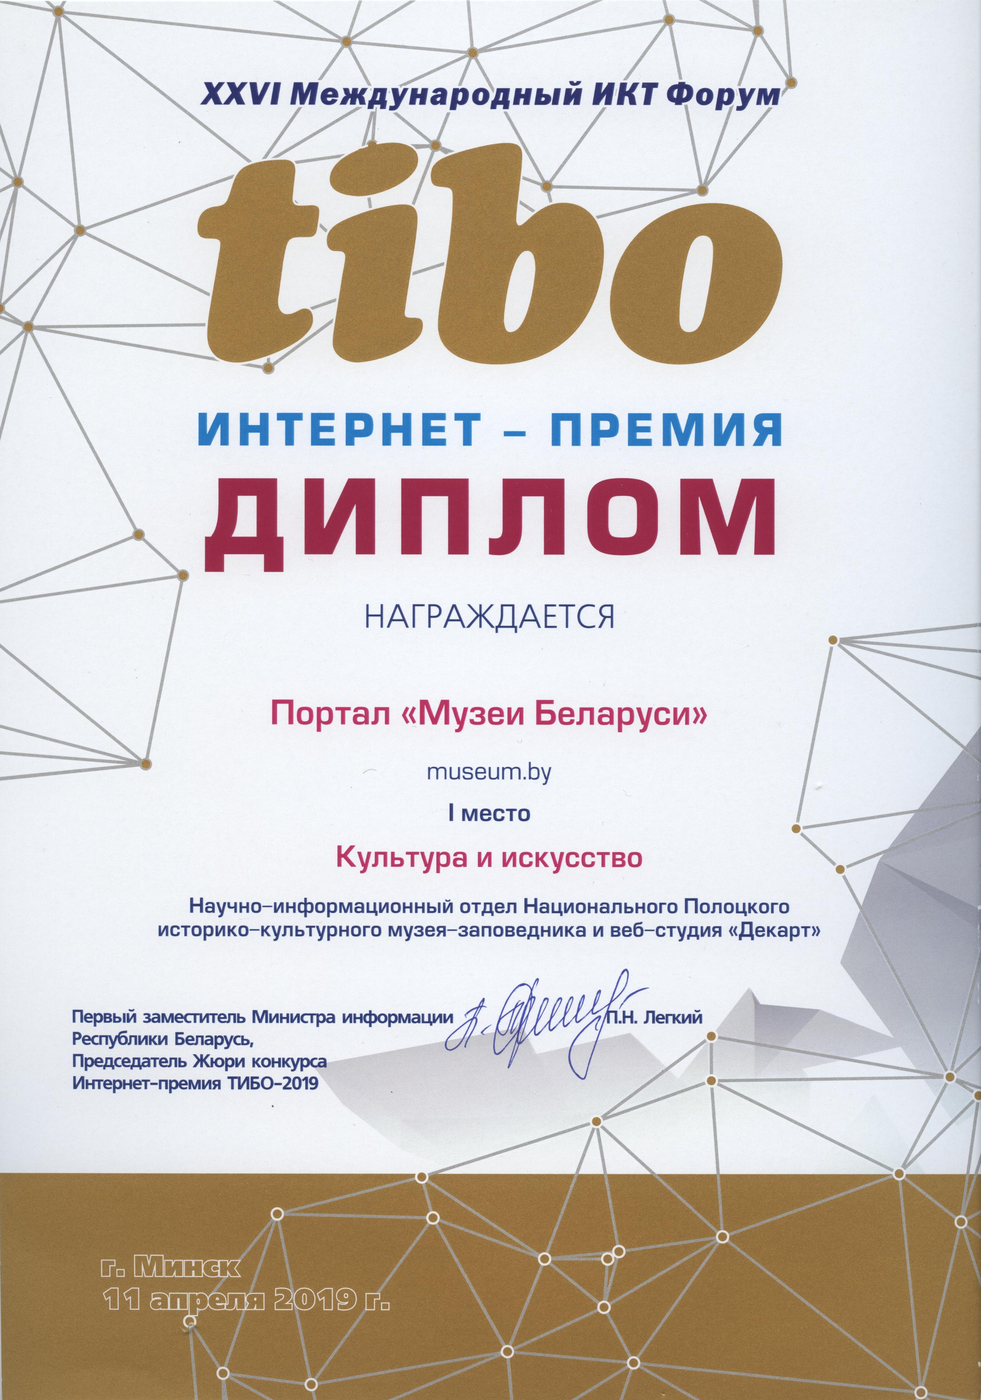 Internet Award TIBO-2019